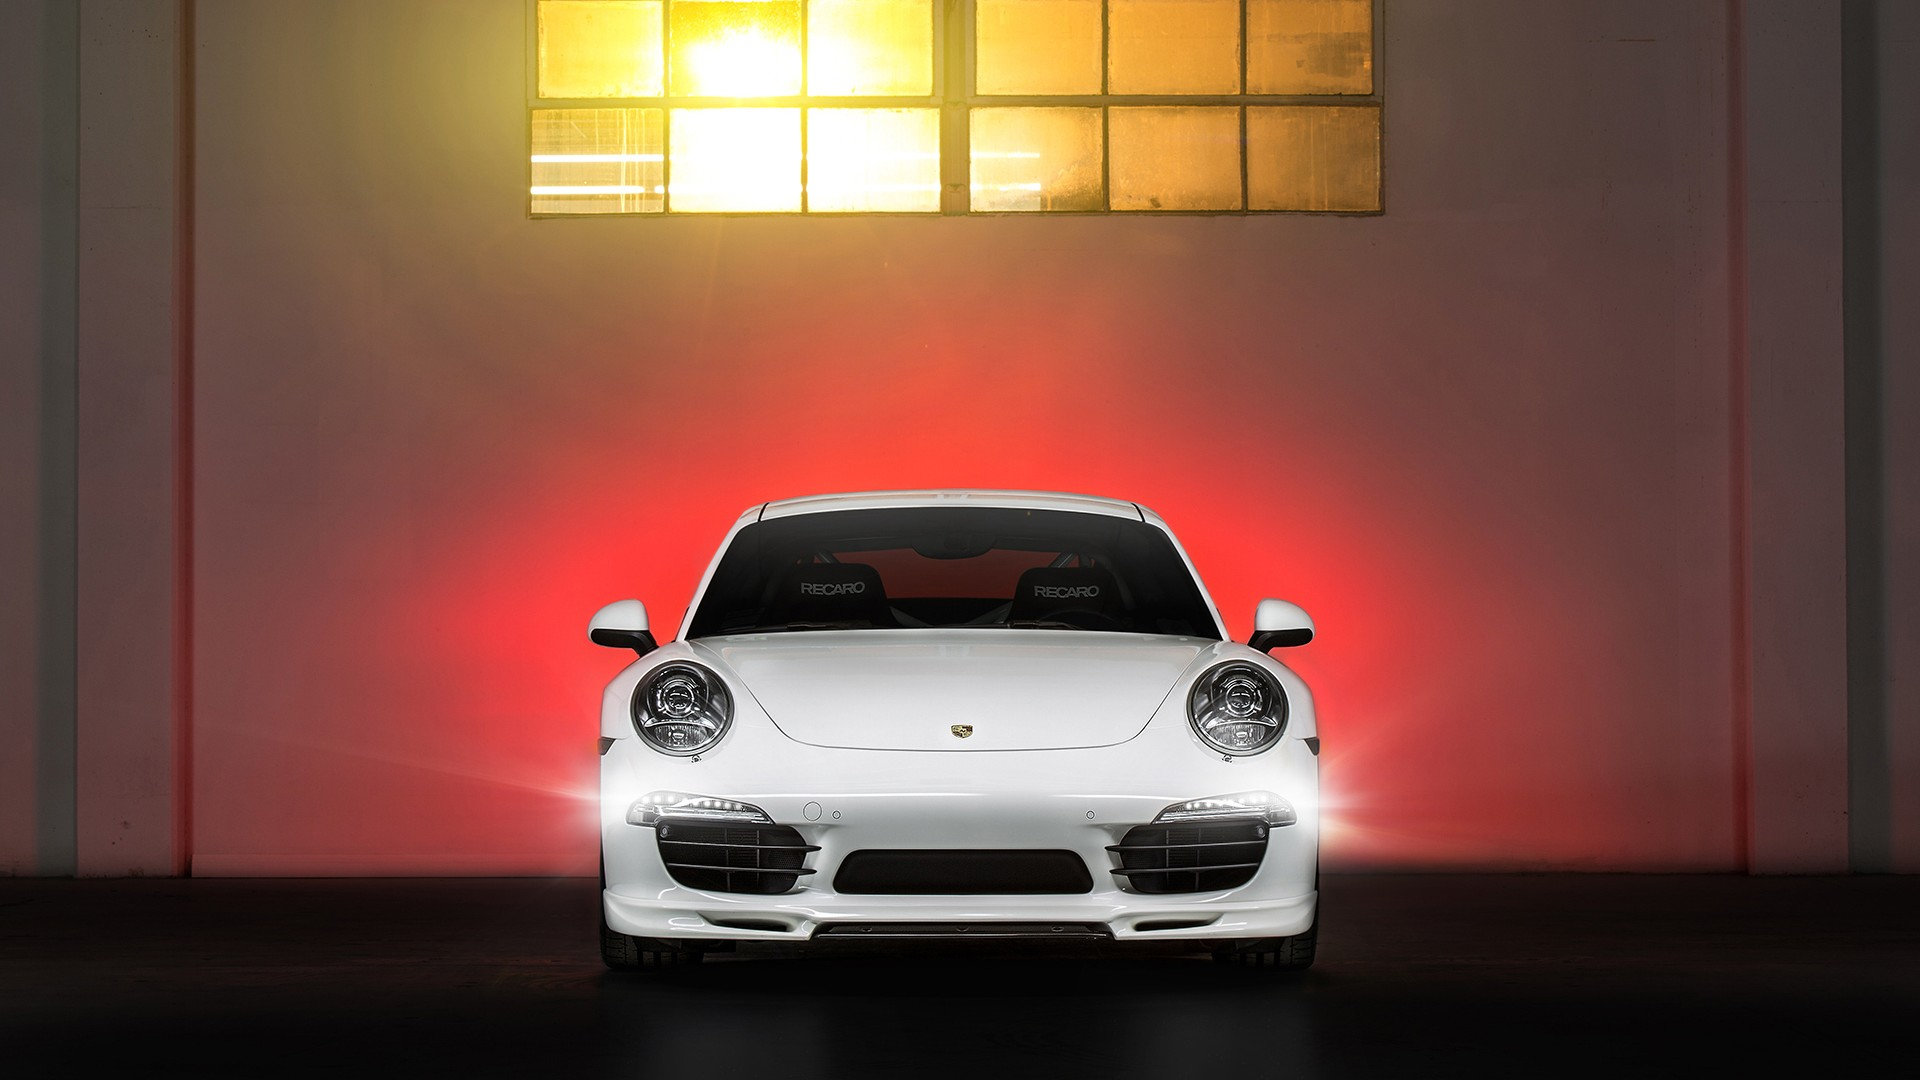 Download full hd 1920x1080 Porsche 911 computer wallpaper ID:102131 for free